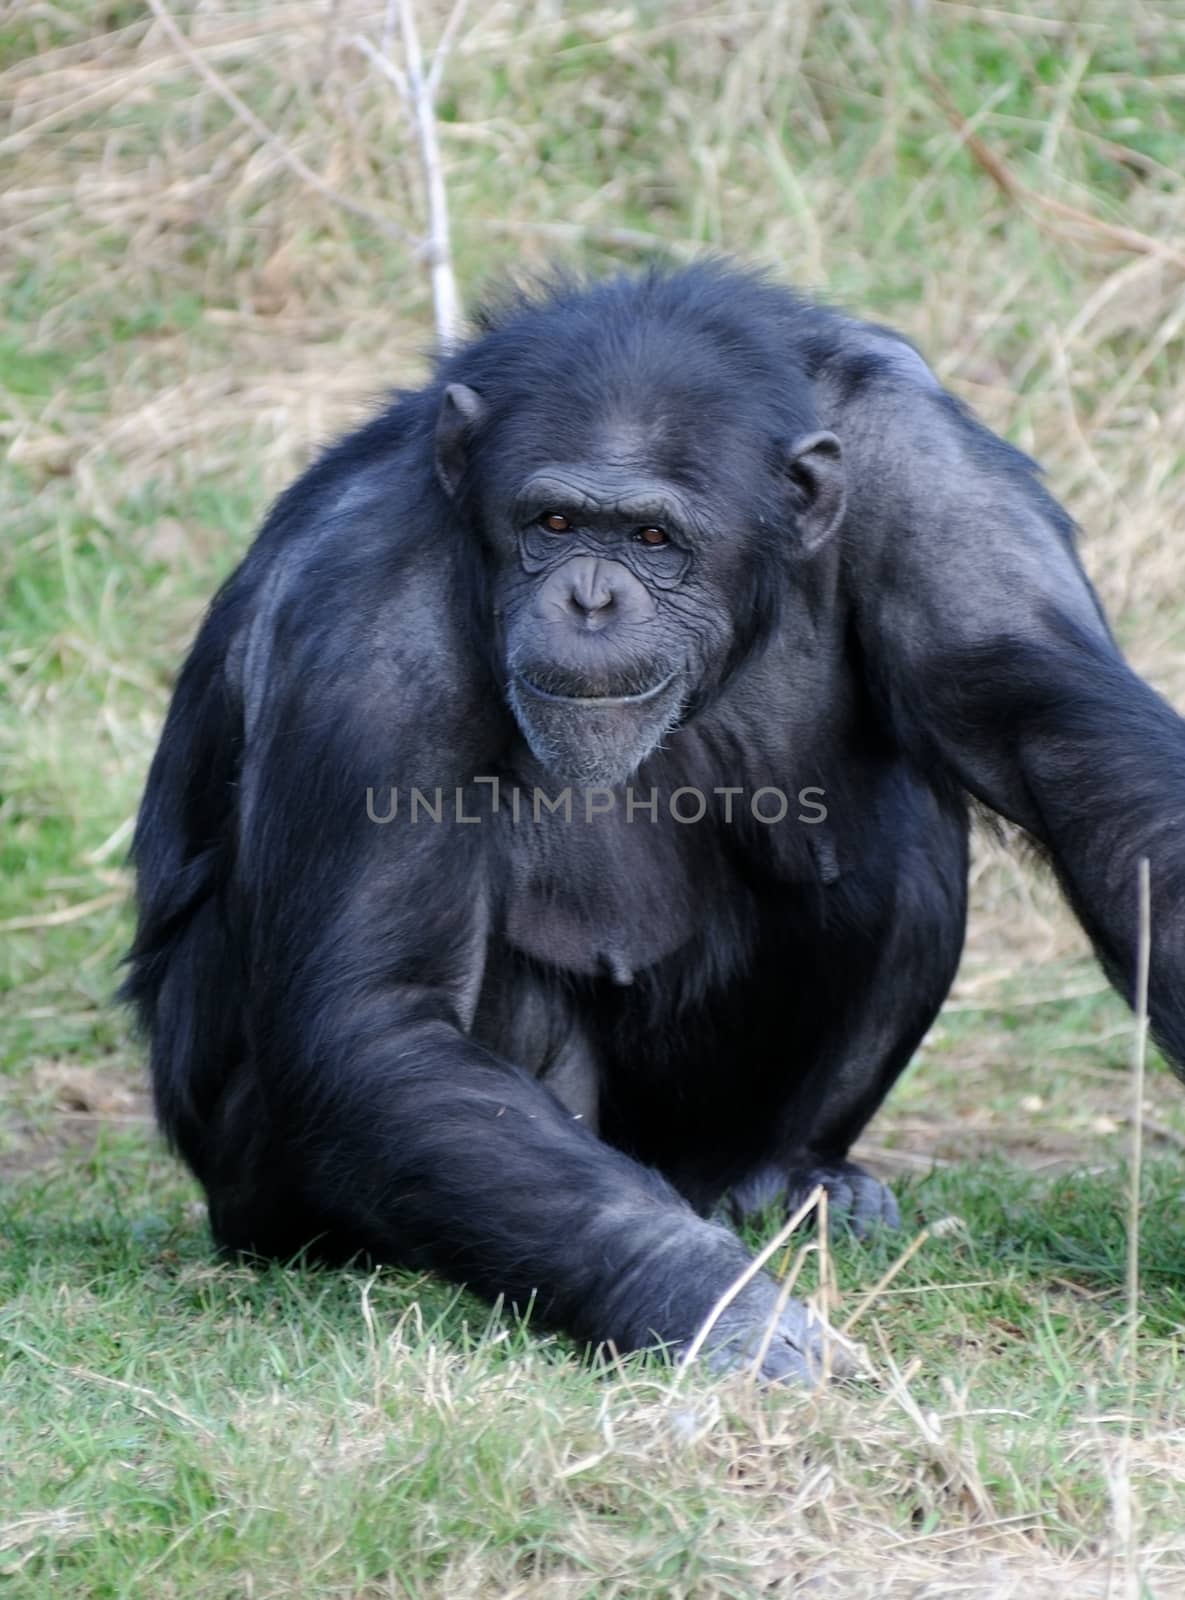 Chimpanzee sitting on the grass looking alert